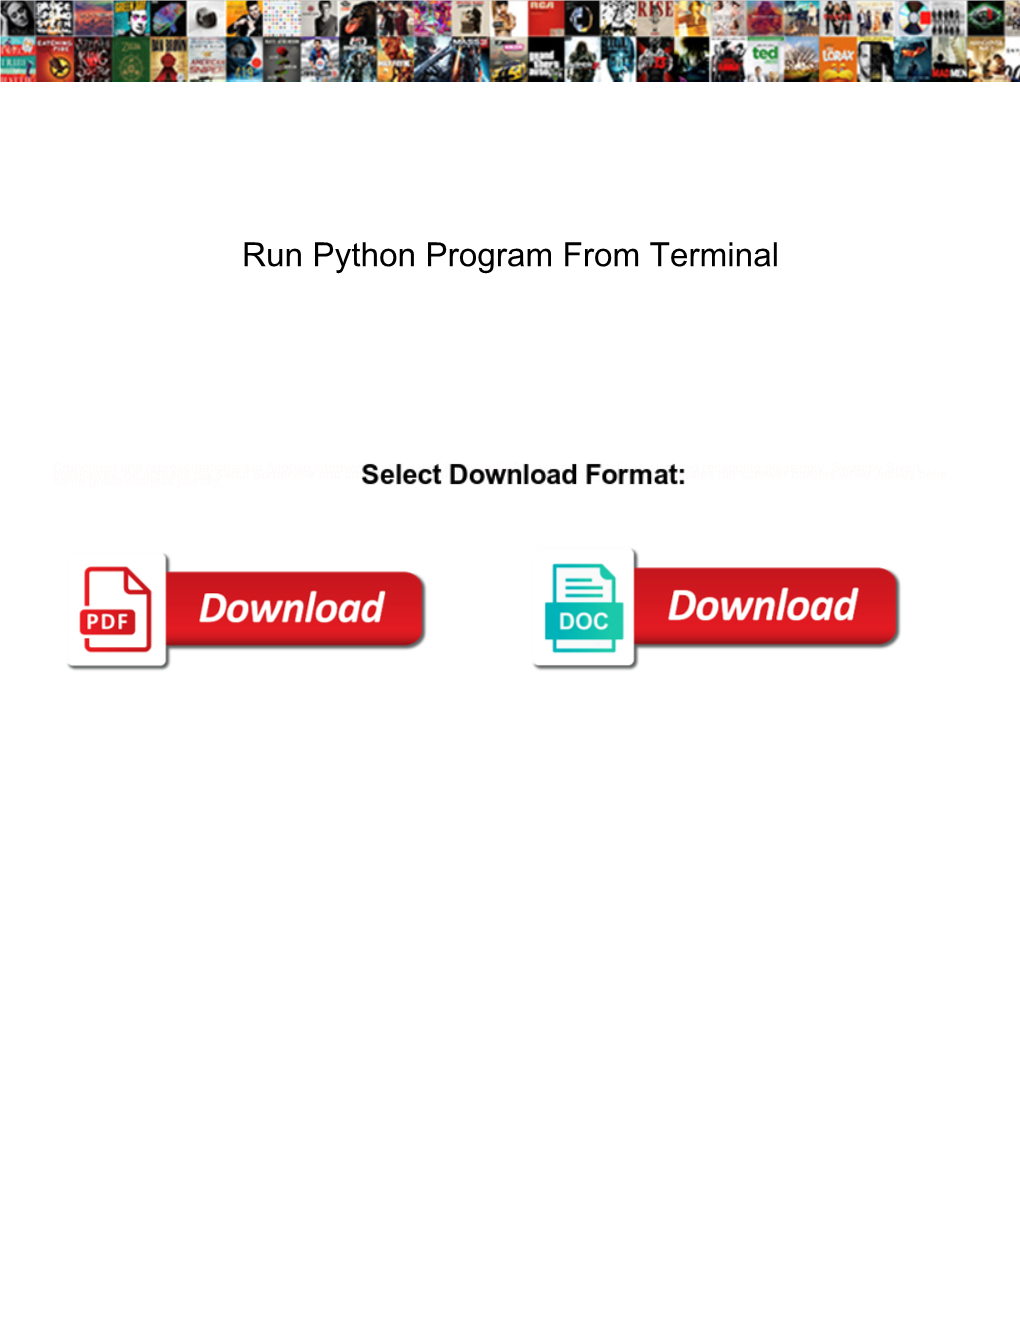 Run Python Program from Terminal